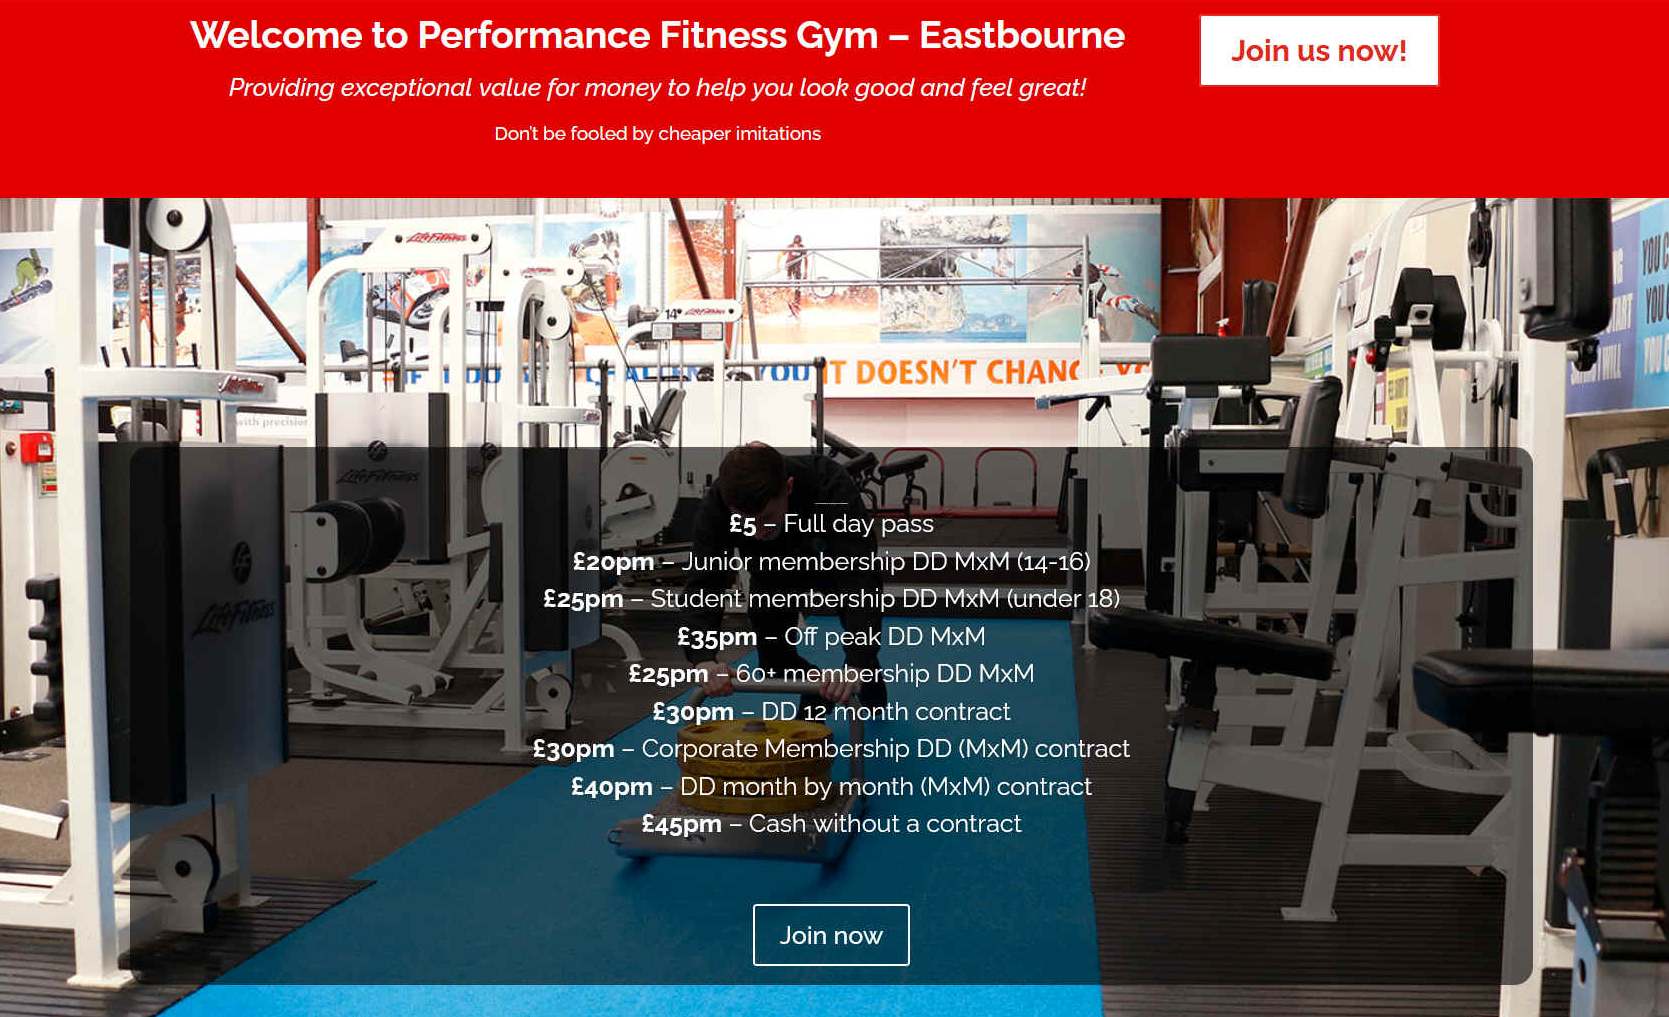 Performance Fitness Gym, Eastbourne, near Tesco roundabout, Lottbridge Drove